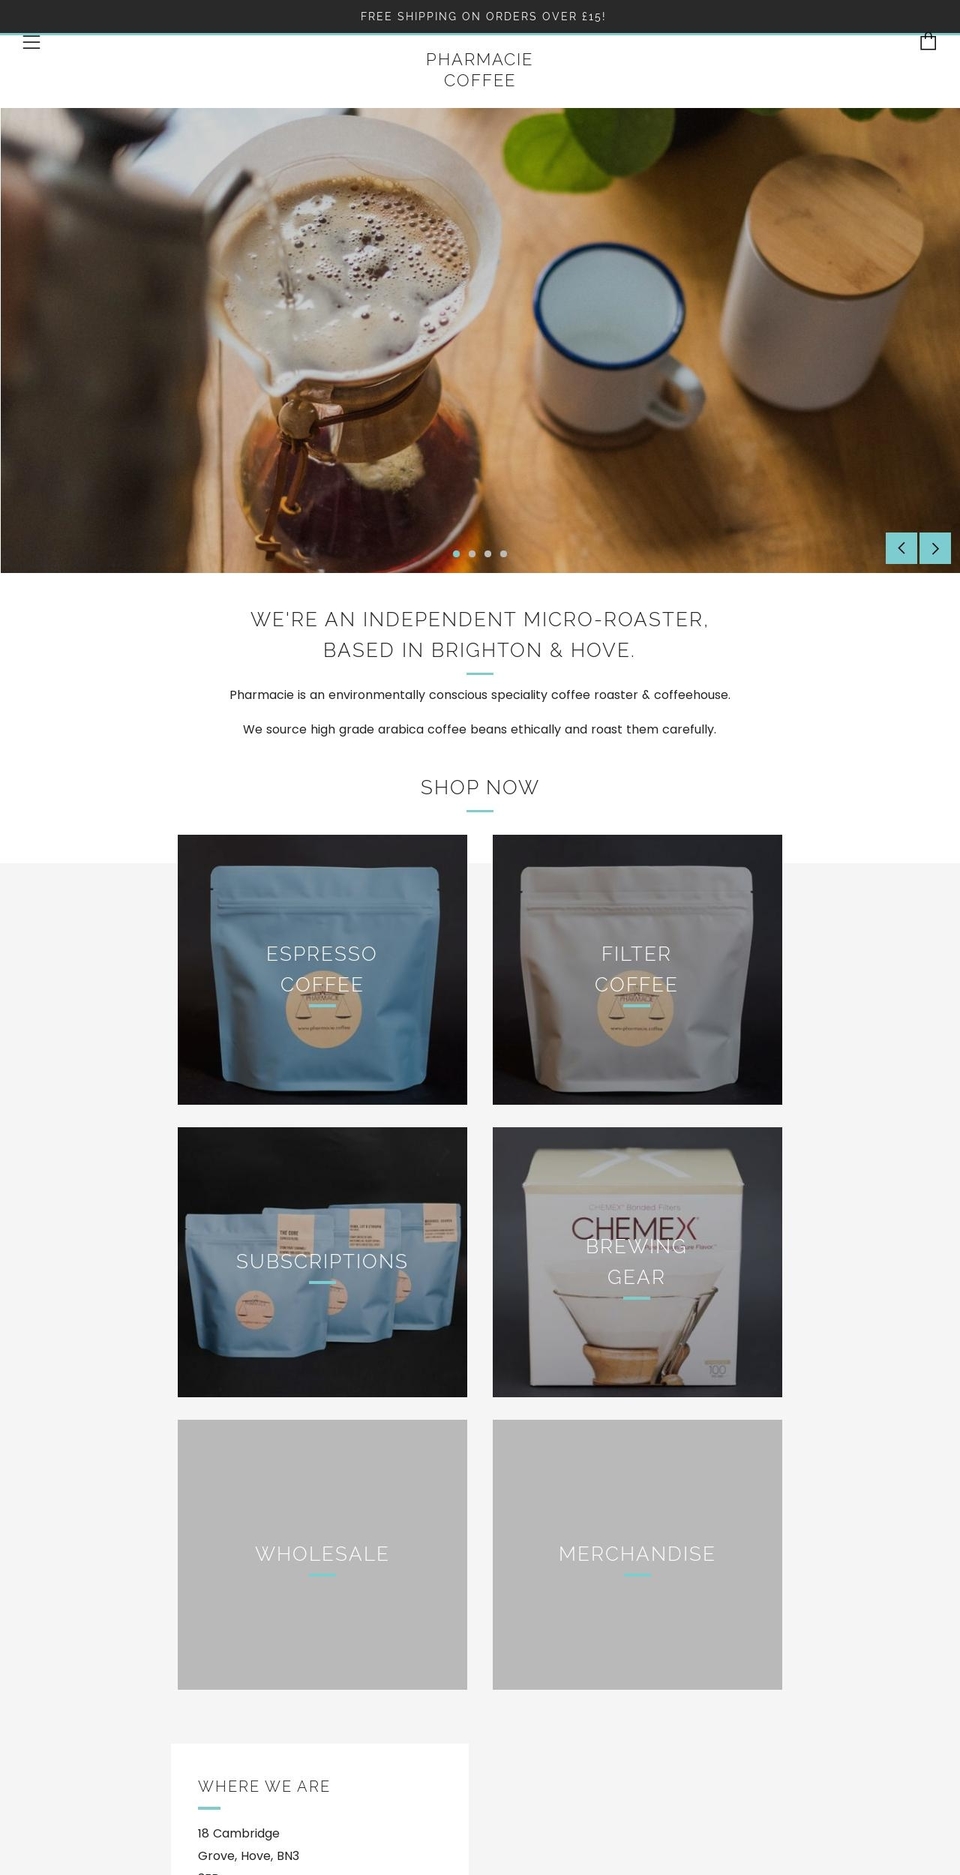 pharmacie.coffee shopify website screenshot